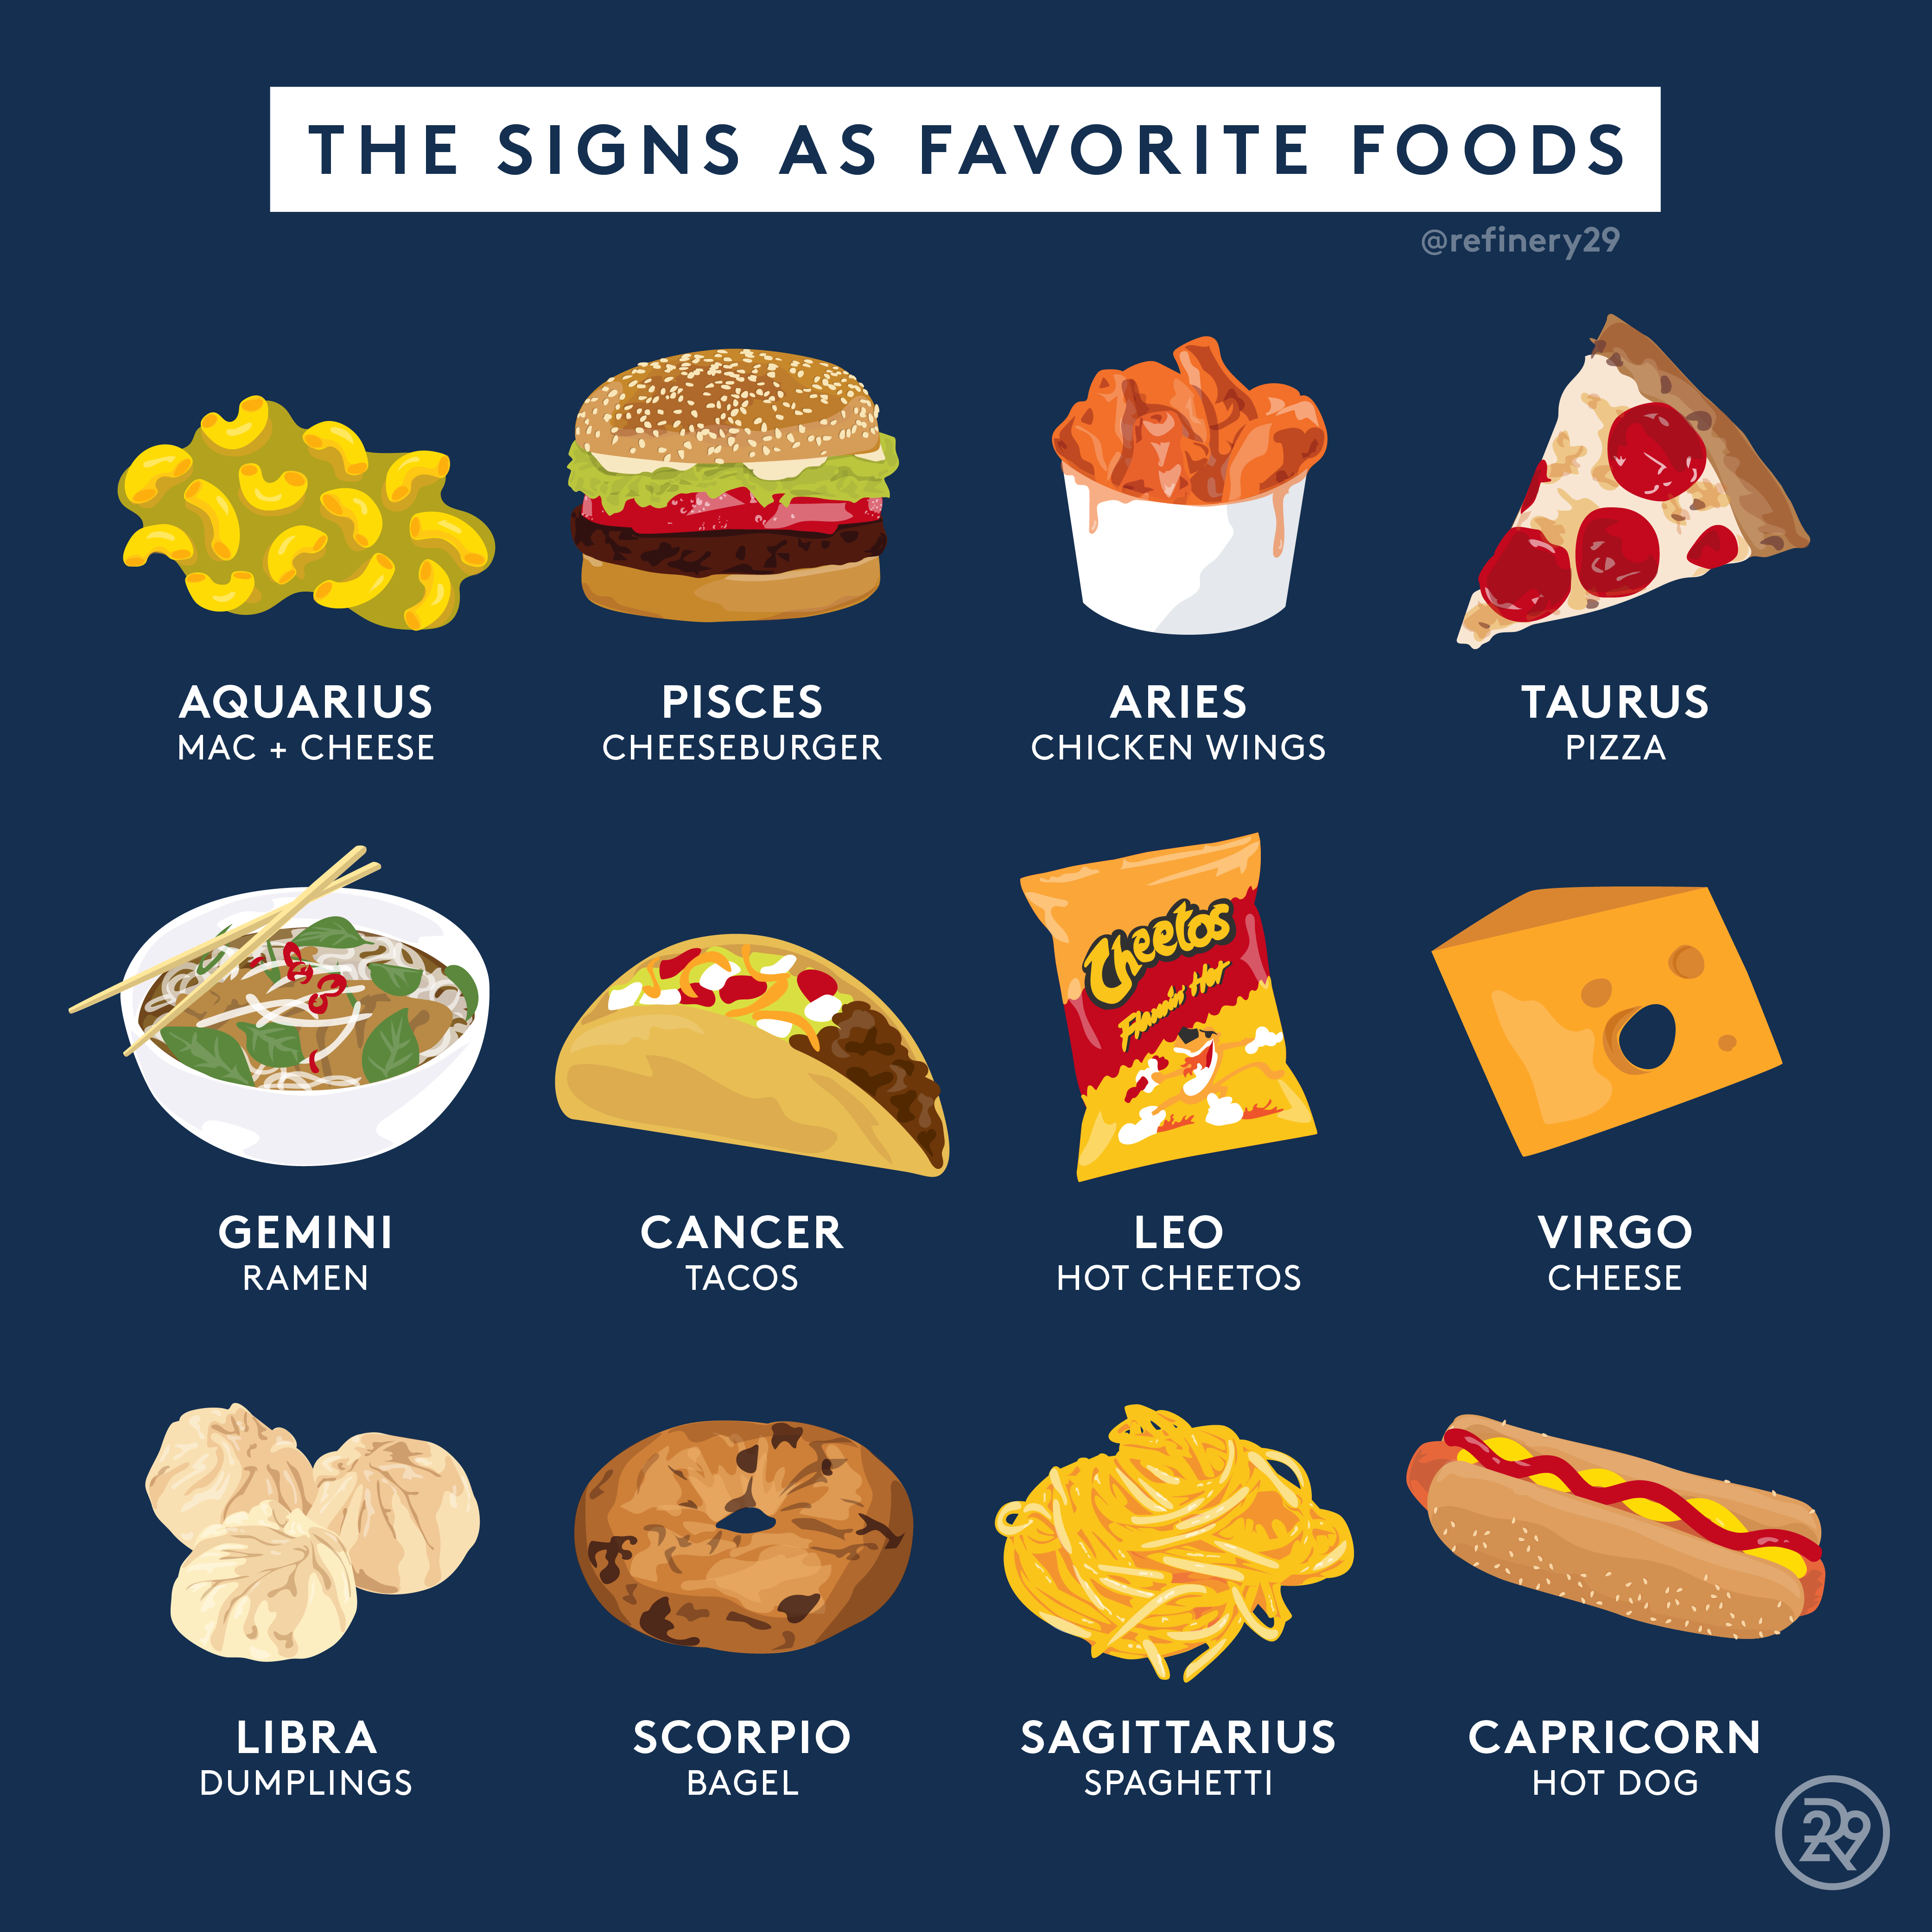 Hrana po zodiaku: kako jesti Devico